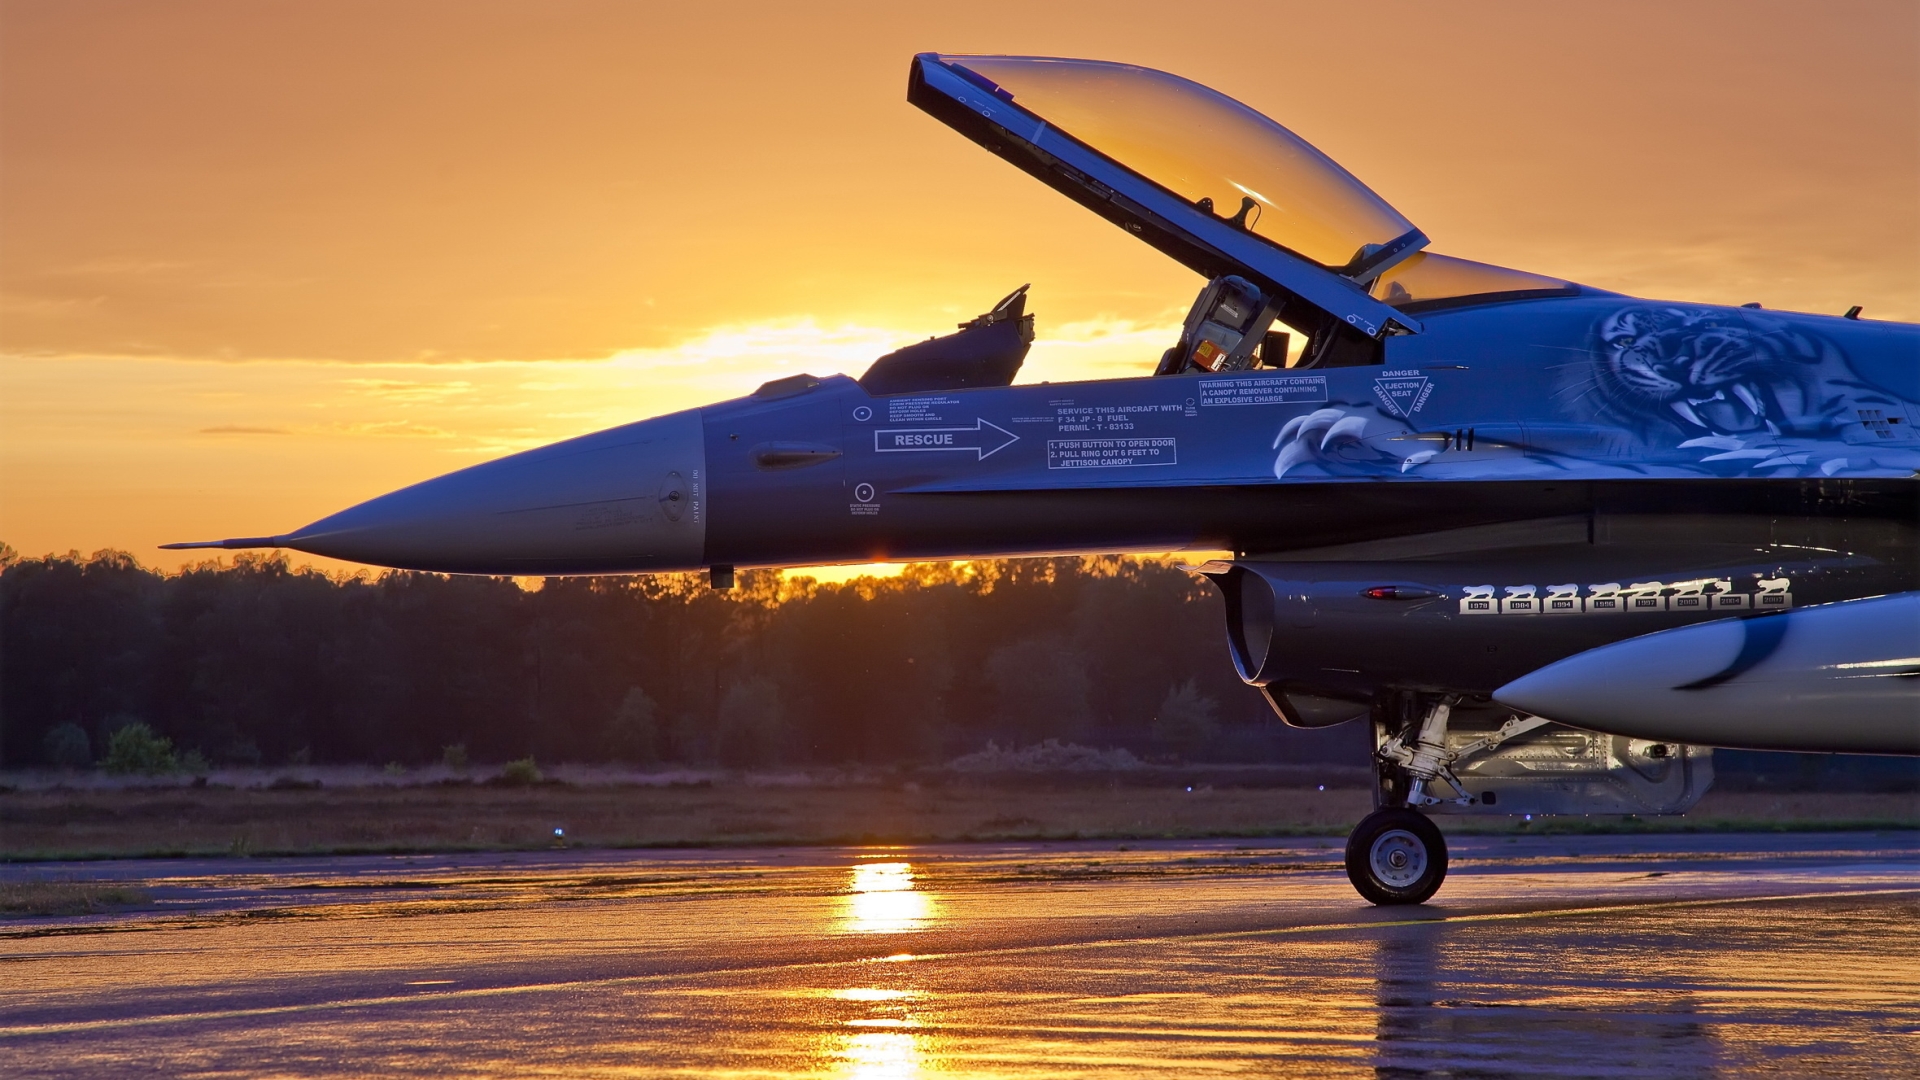 A powerful military aircraft in flight: General Dynamics F-16 Fighting Falcon desktop wallpaper.